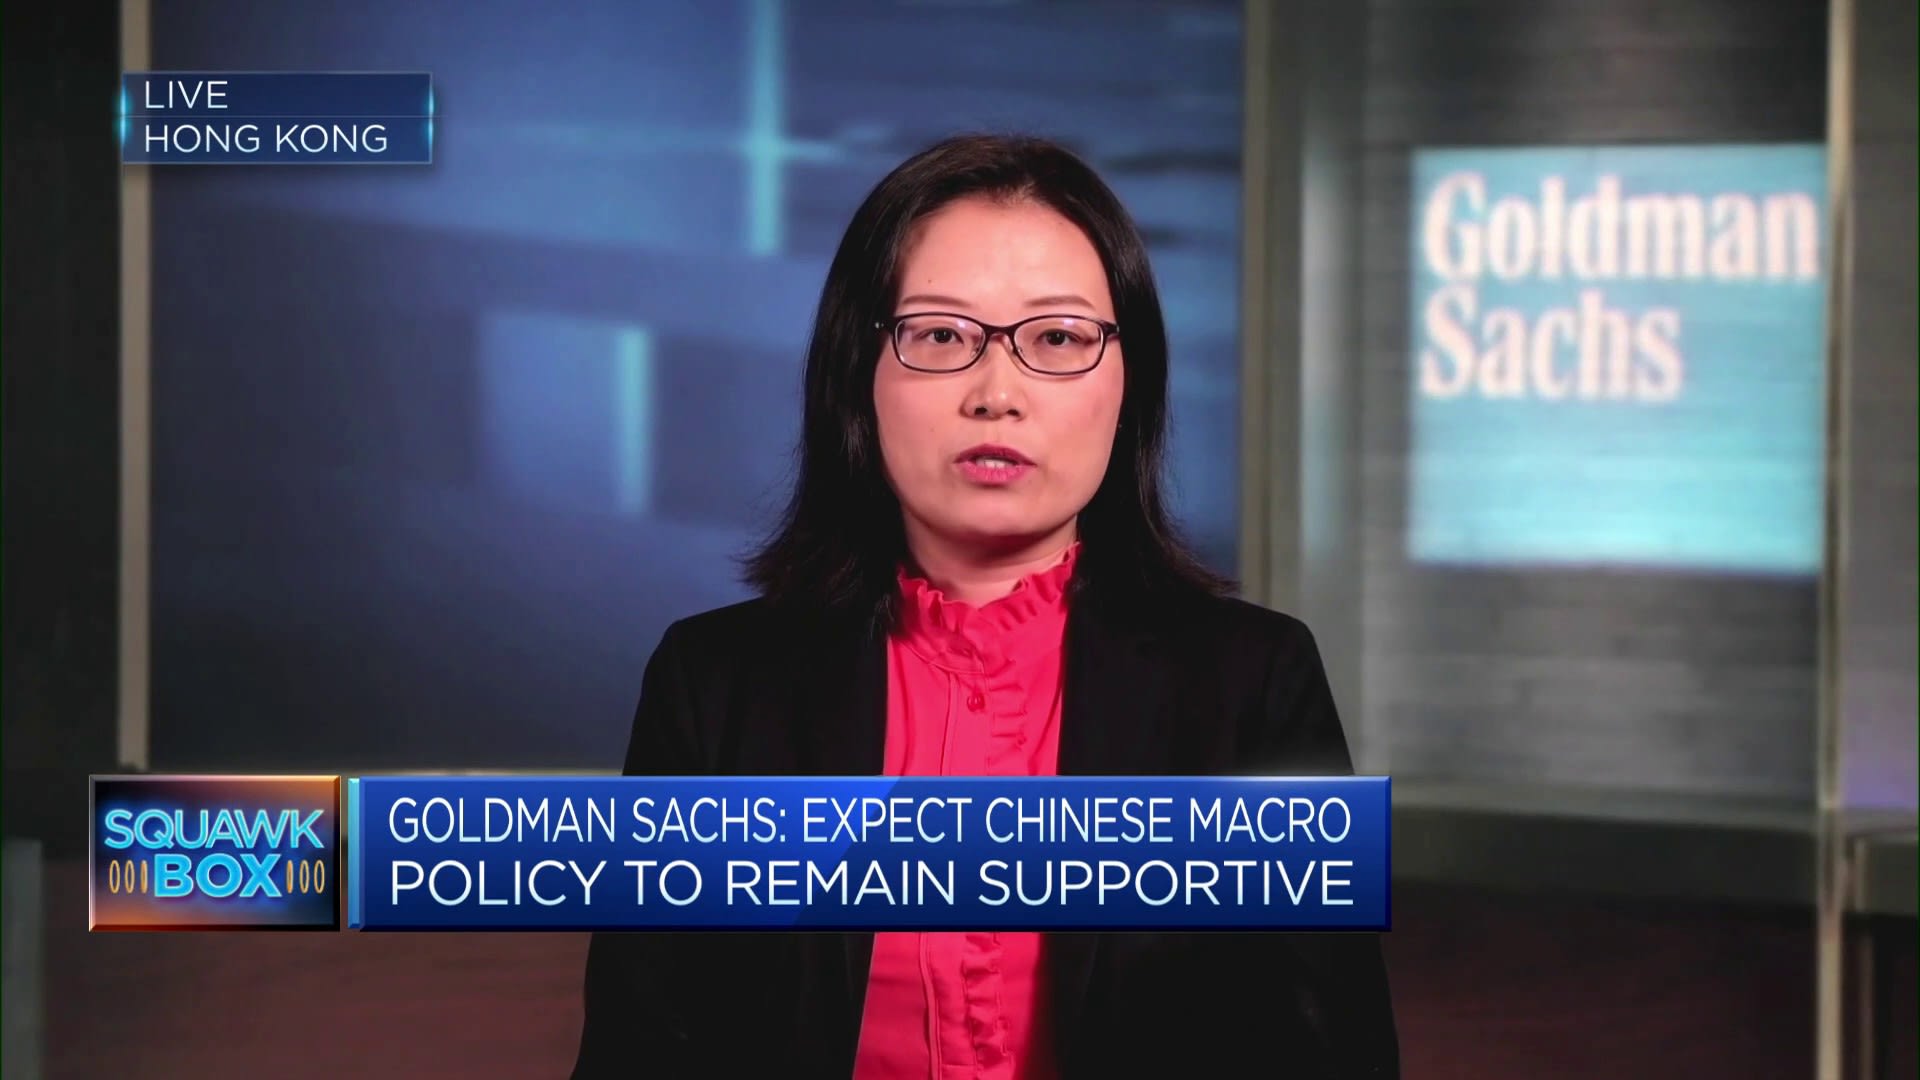 China property market: There's a 'self-fulfilling negative feedback loop,' says Goldman Sachs